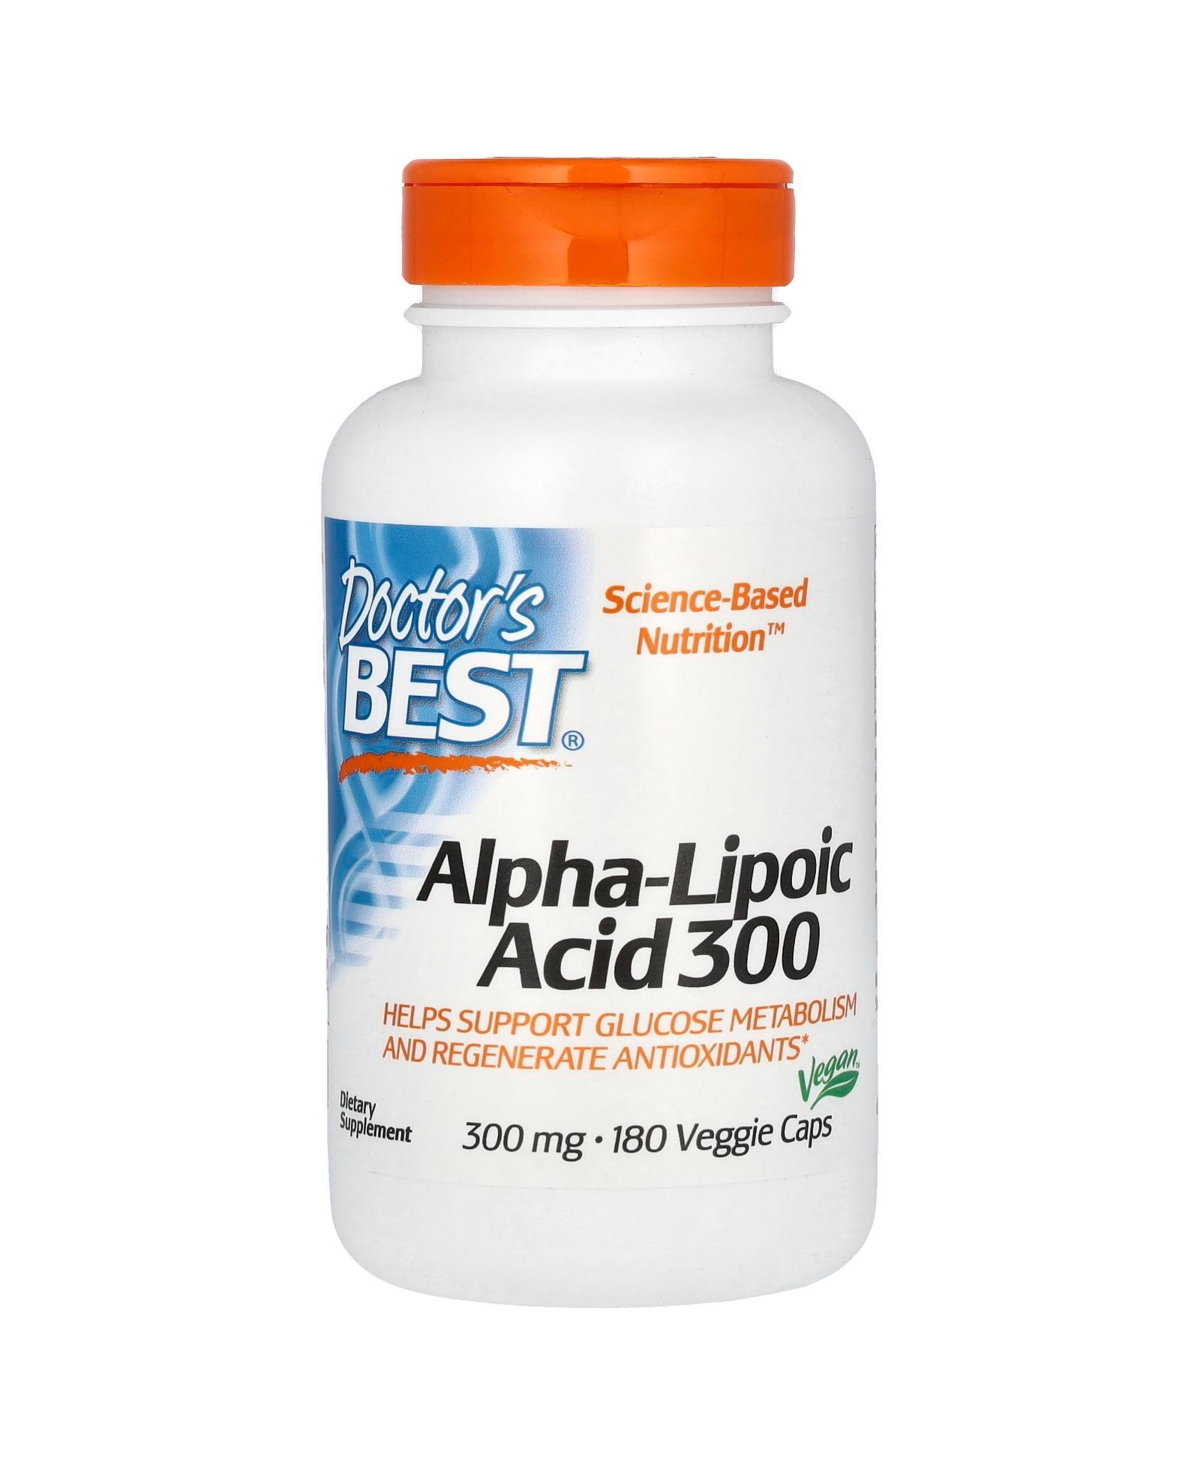 Alpha-Lipoic Acid 300 300 mg - 180 Veggie Caps - Assorted Pre-pack (See Table